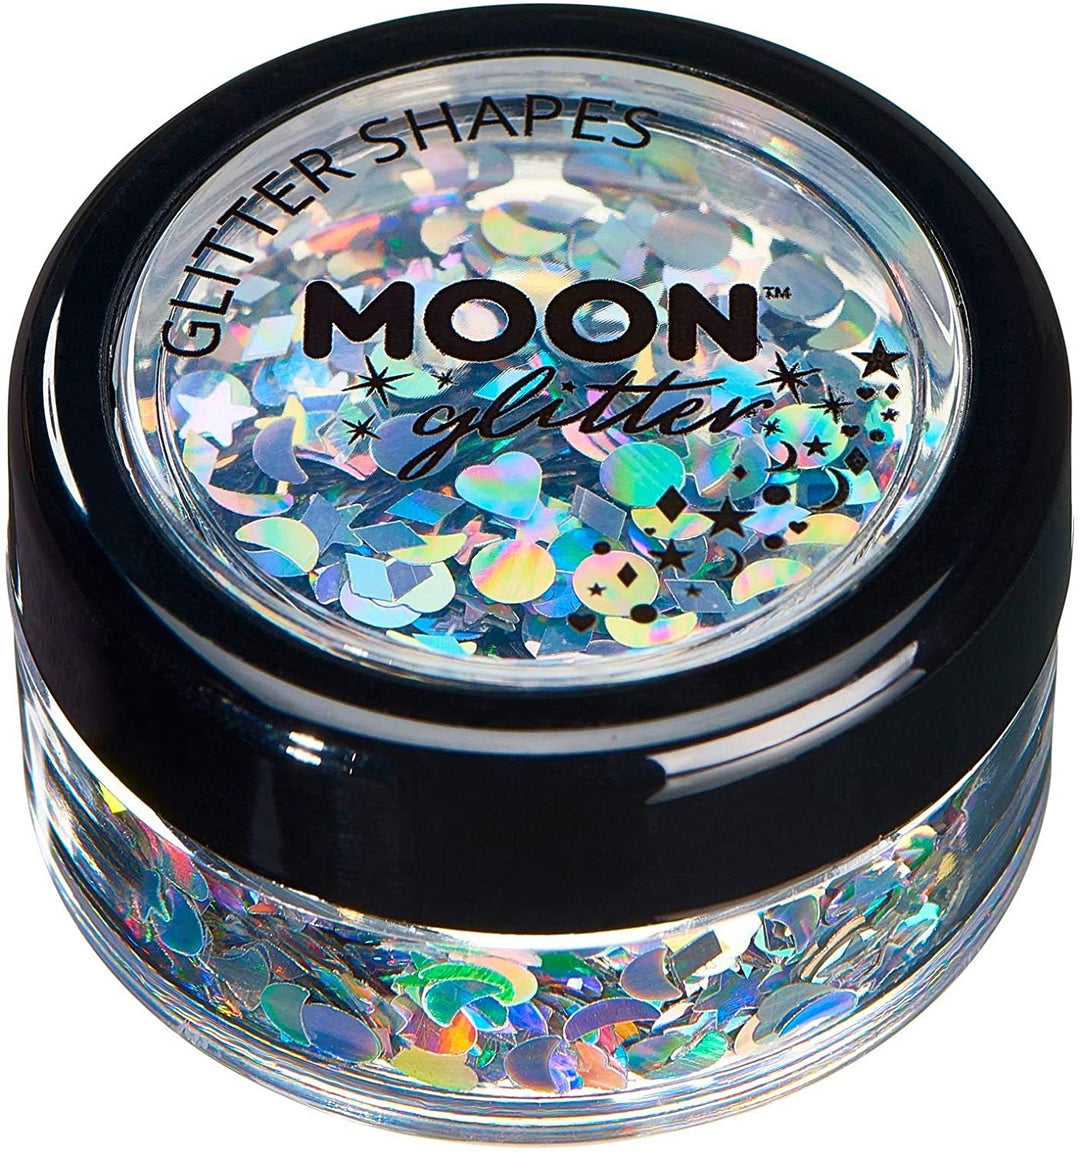 Smiffys Holografische Glitter Vormen van Moon Glitter - Zilver - 3g